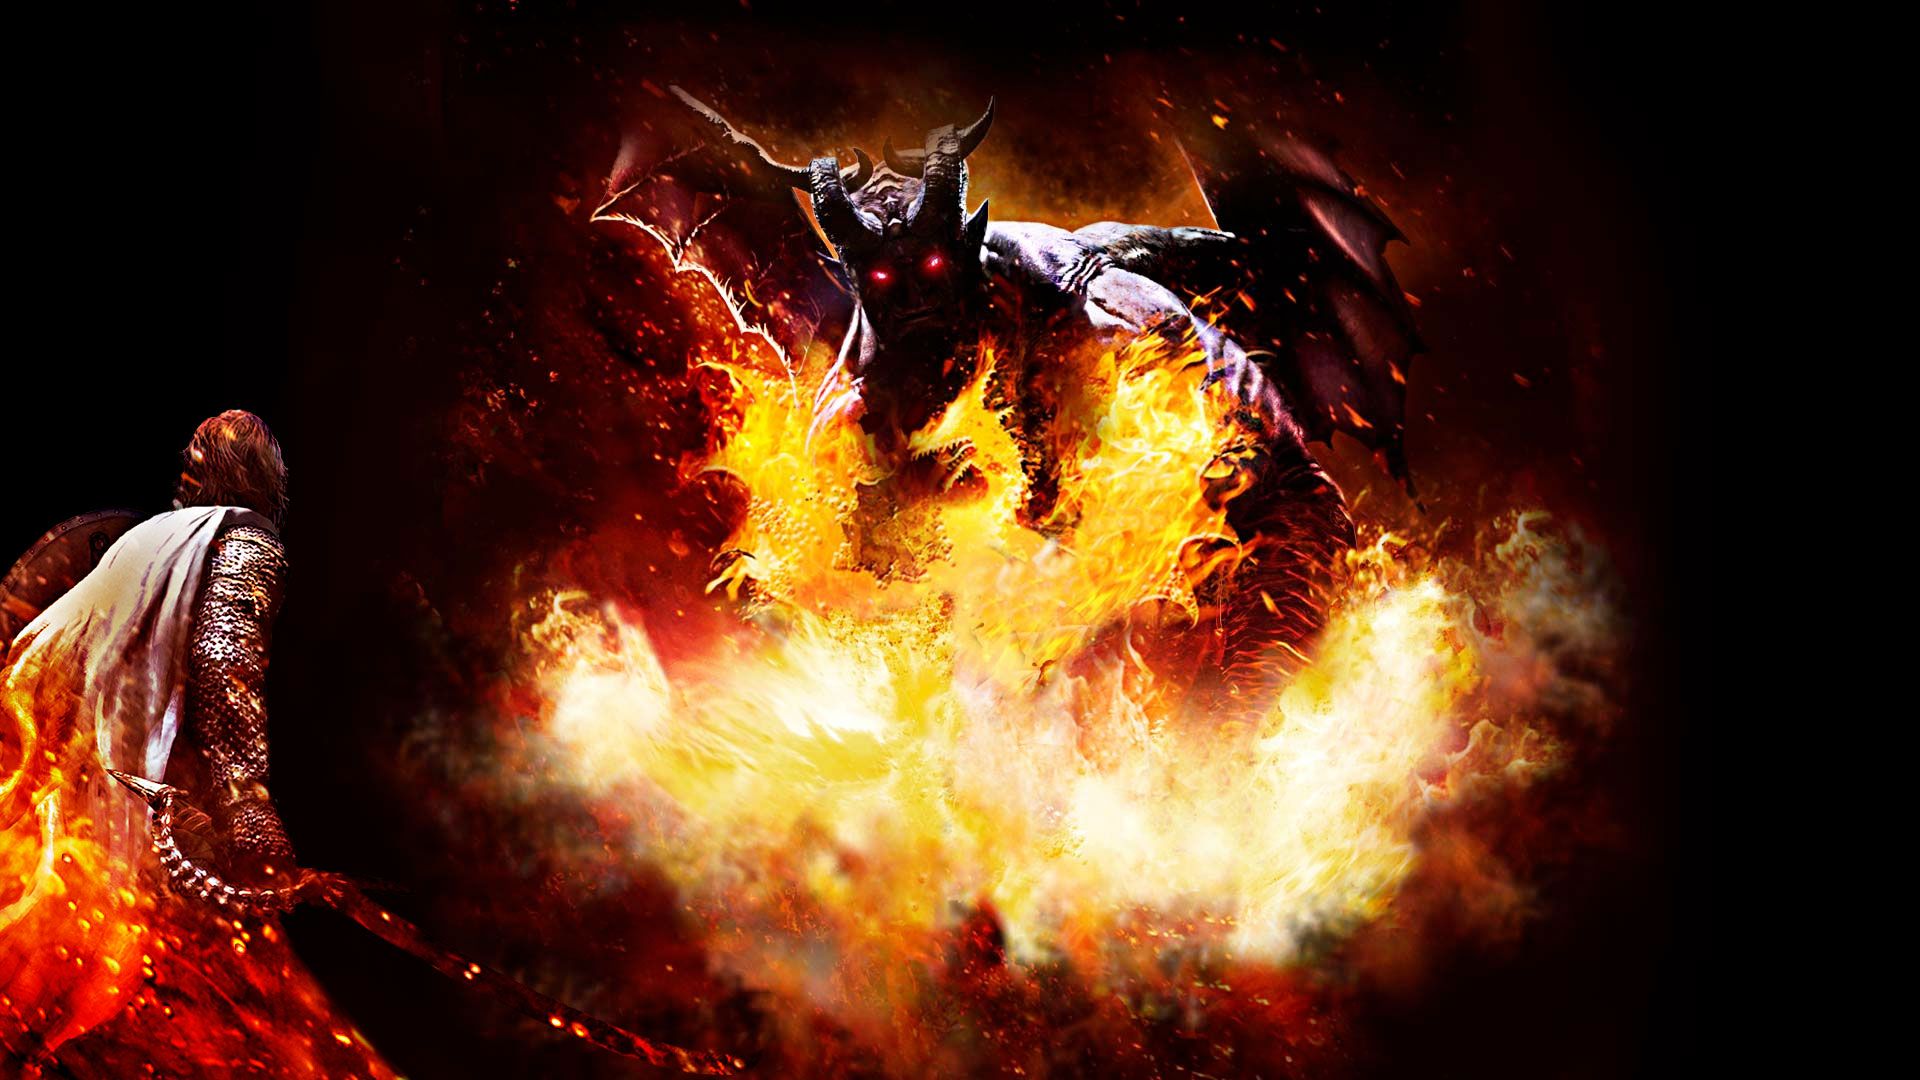 Dragons Dogma Dark Arisen Wallpaper .gamelust.com